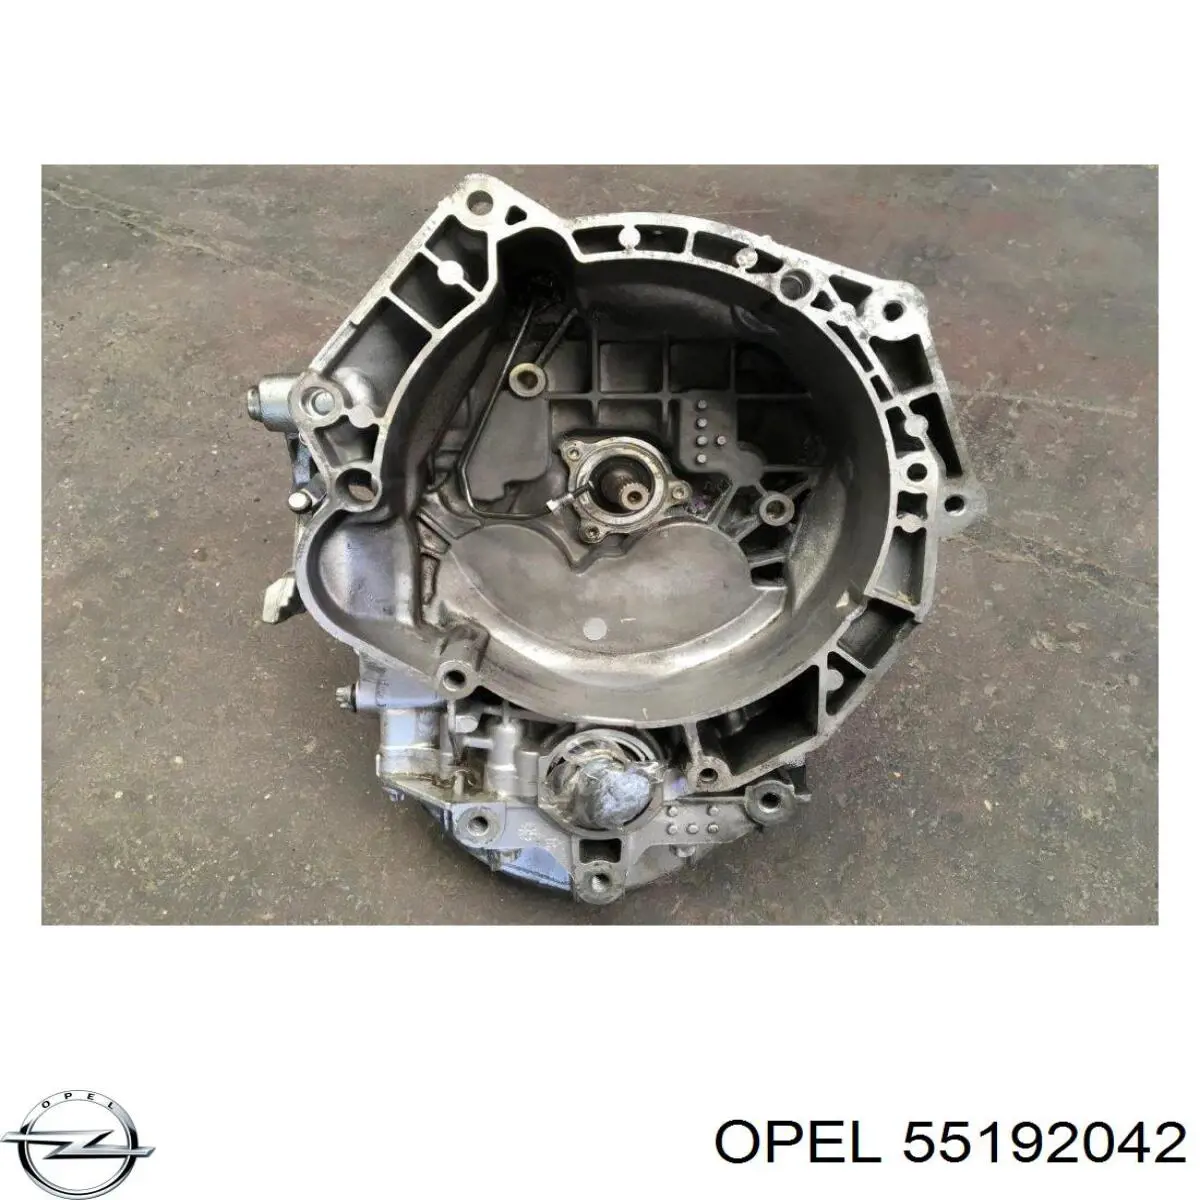 M32019DI Opel caja de cambios mecánica, completa